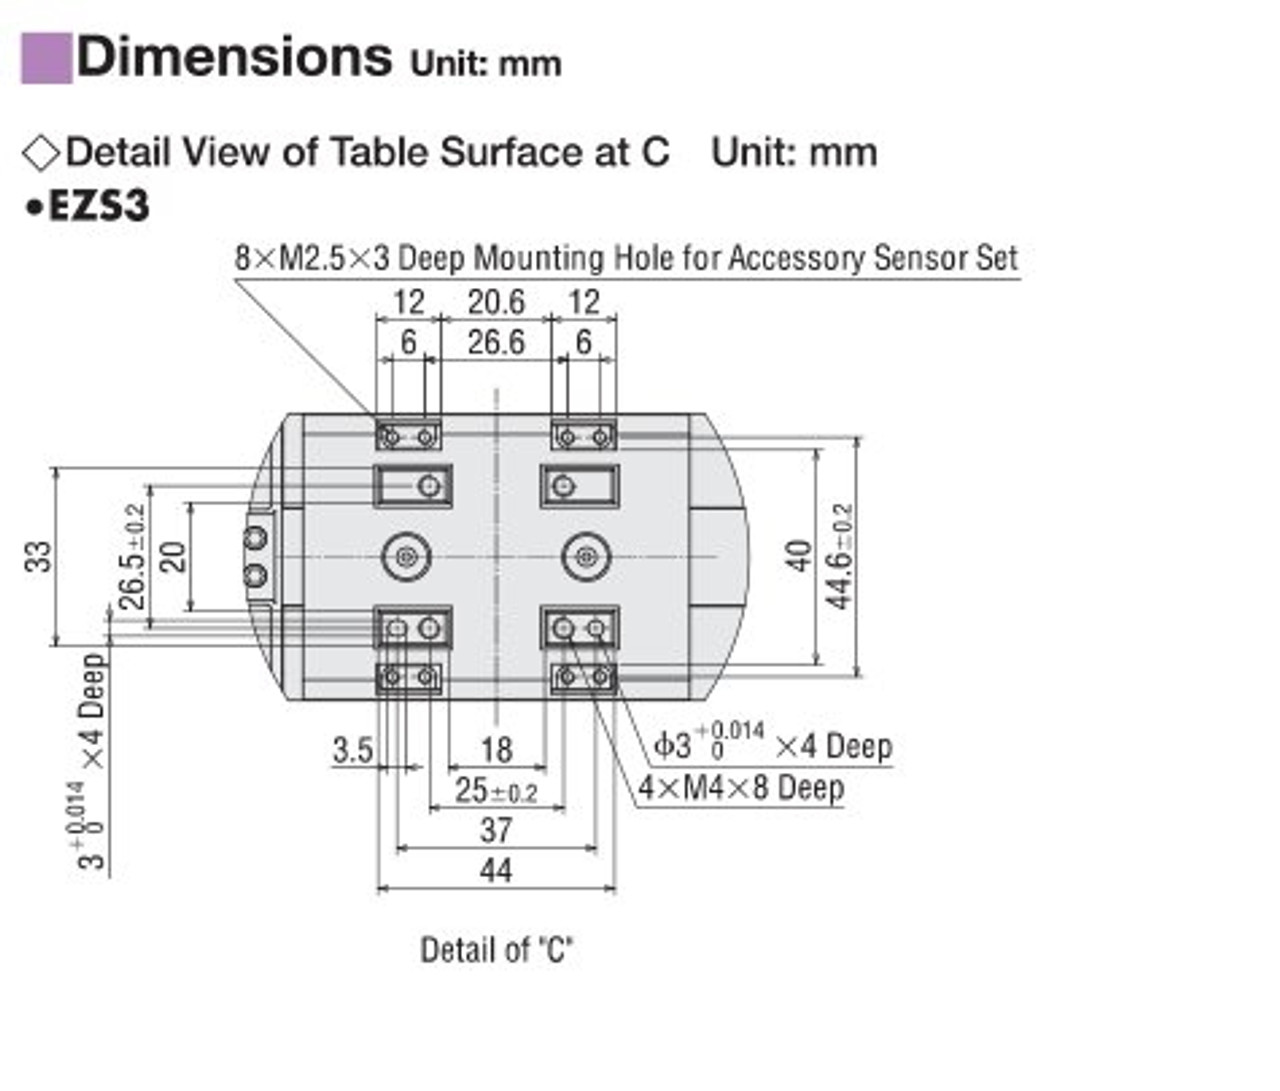 EZSM3LE050AZMC - Dimensions